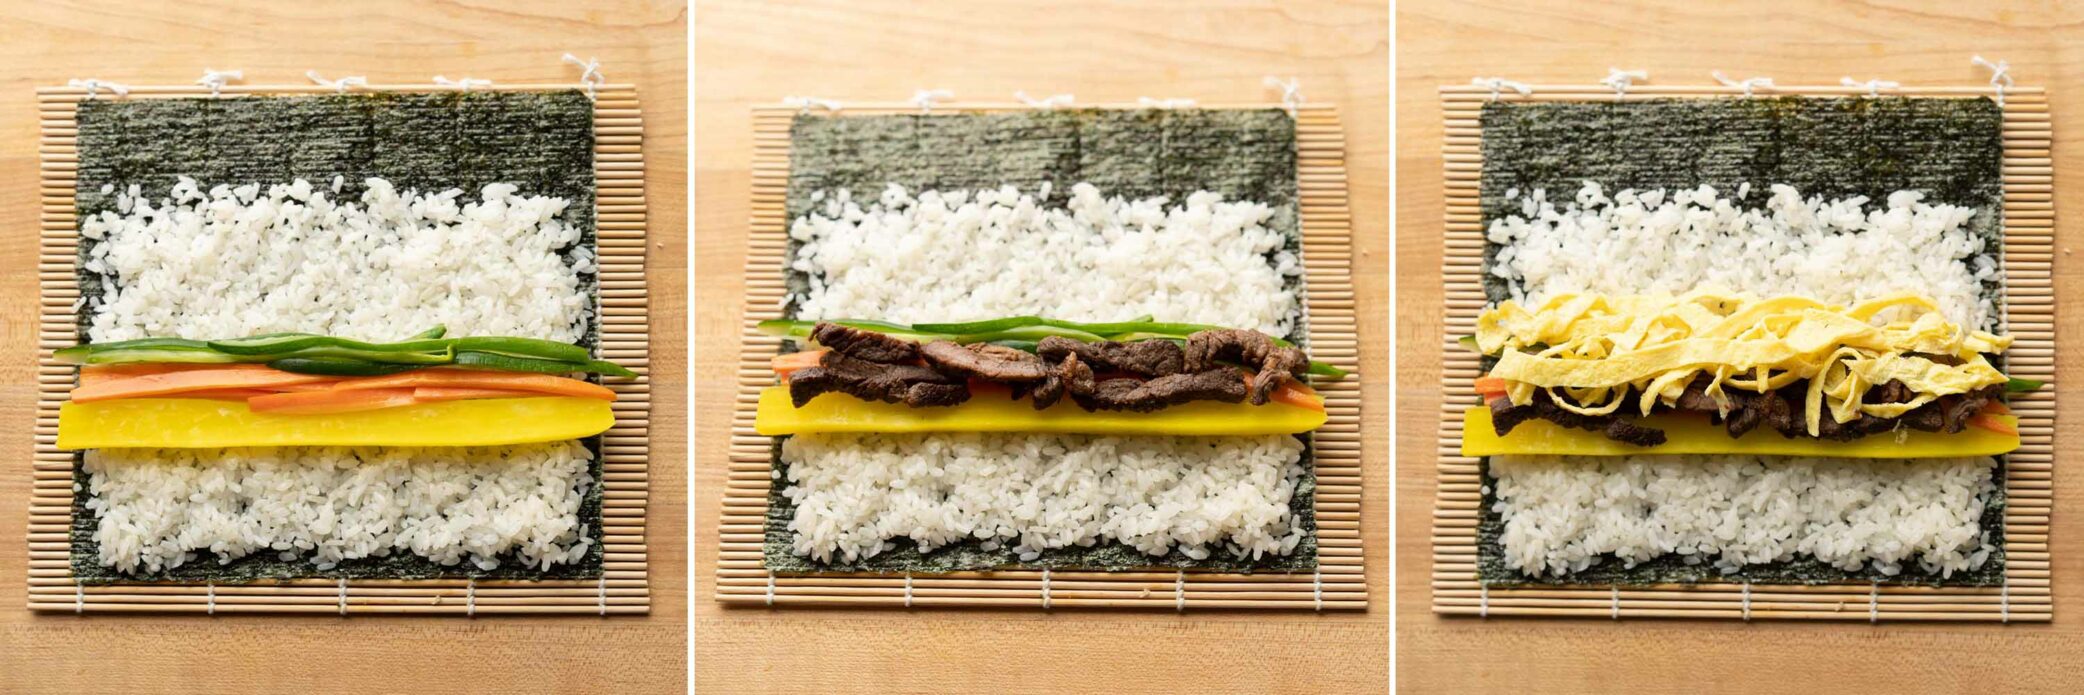 Gimbap (Kimbap) Korean Seaweed Rice Rolls - Chew On This